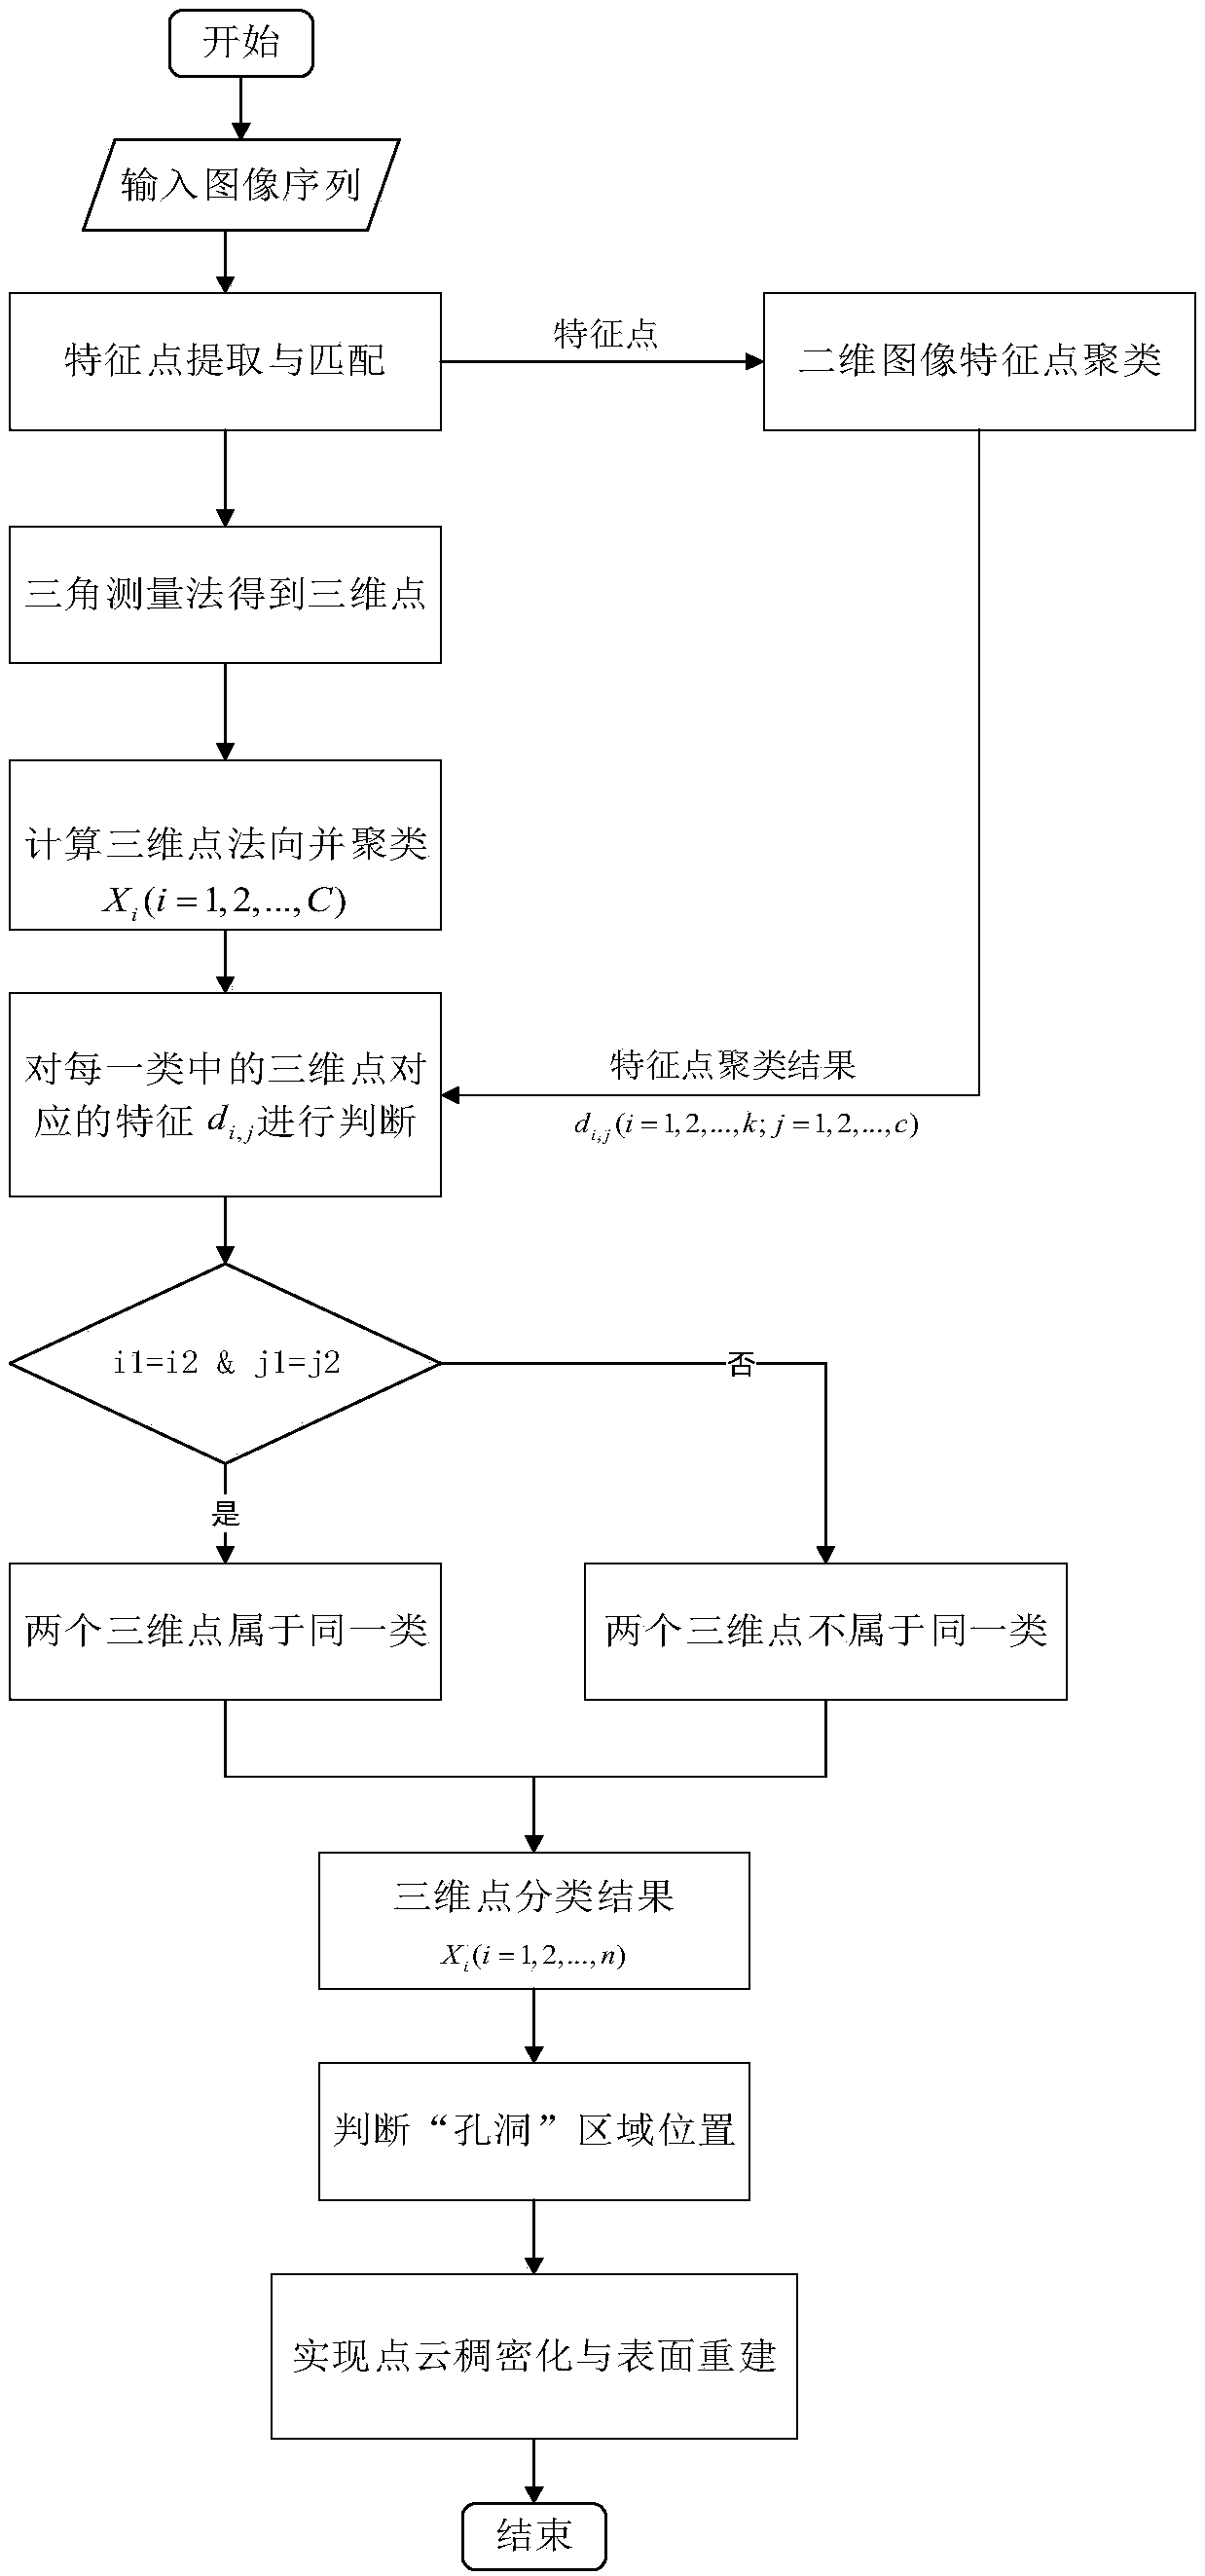 Target reconstruction method based on geometric constraint